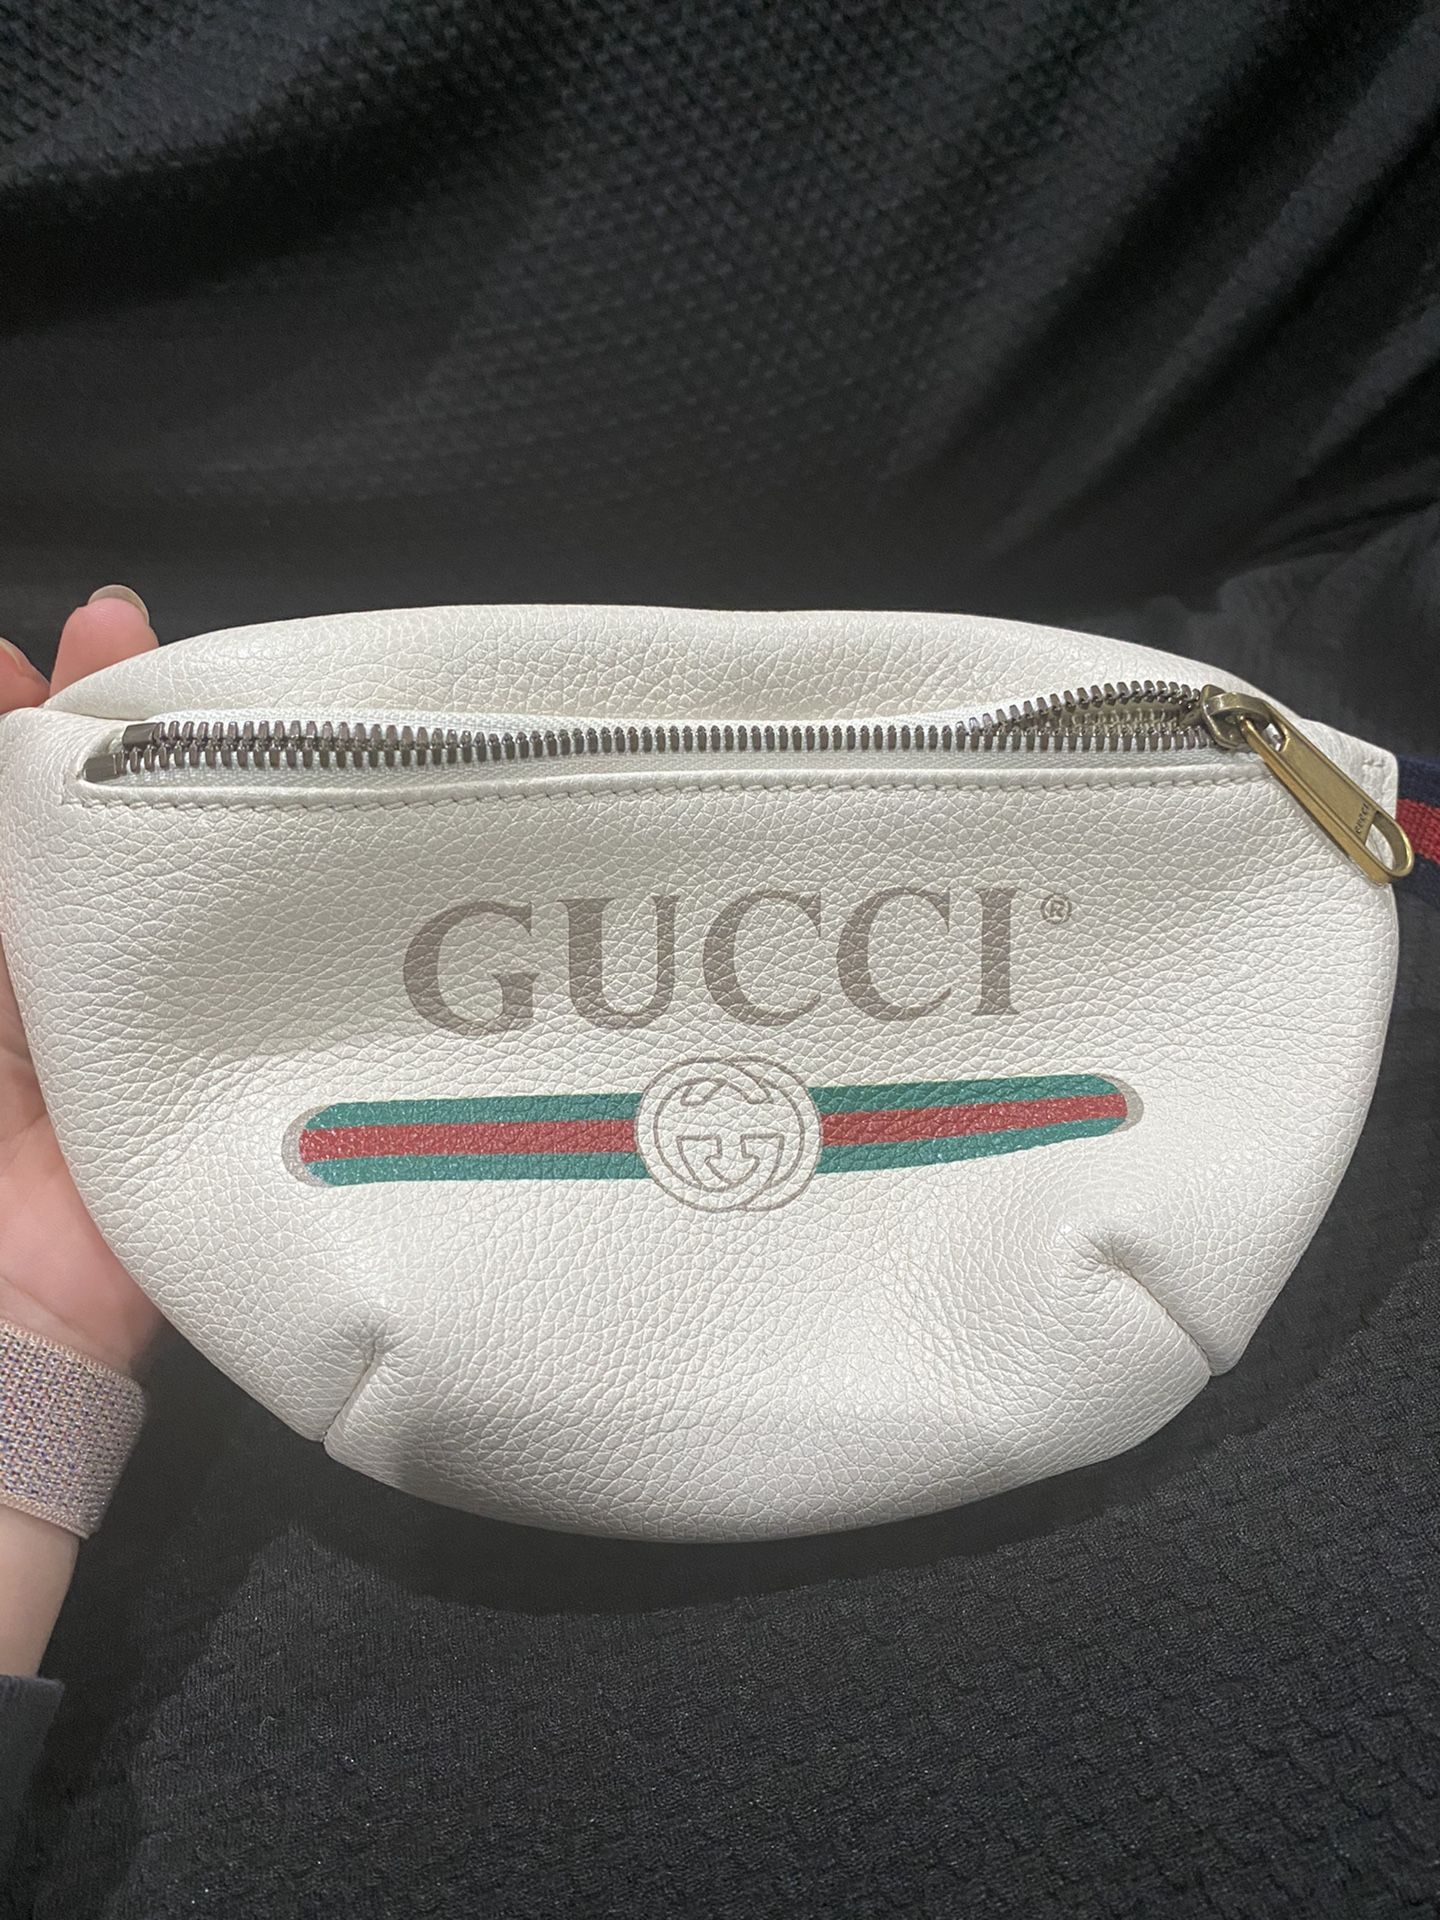 Gucci print small belt bag